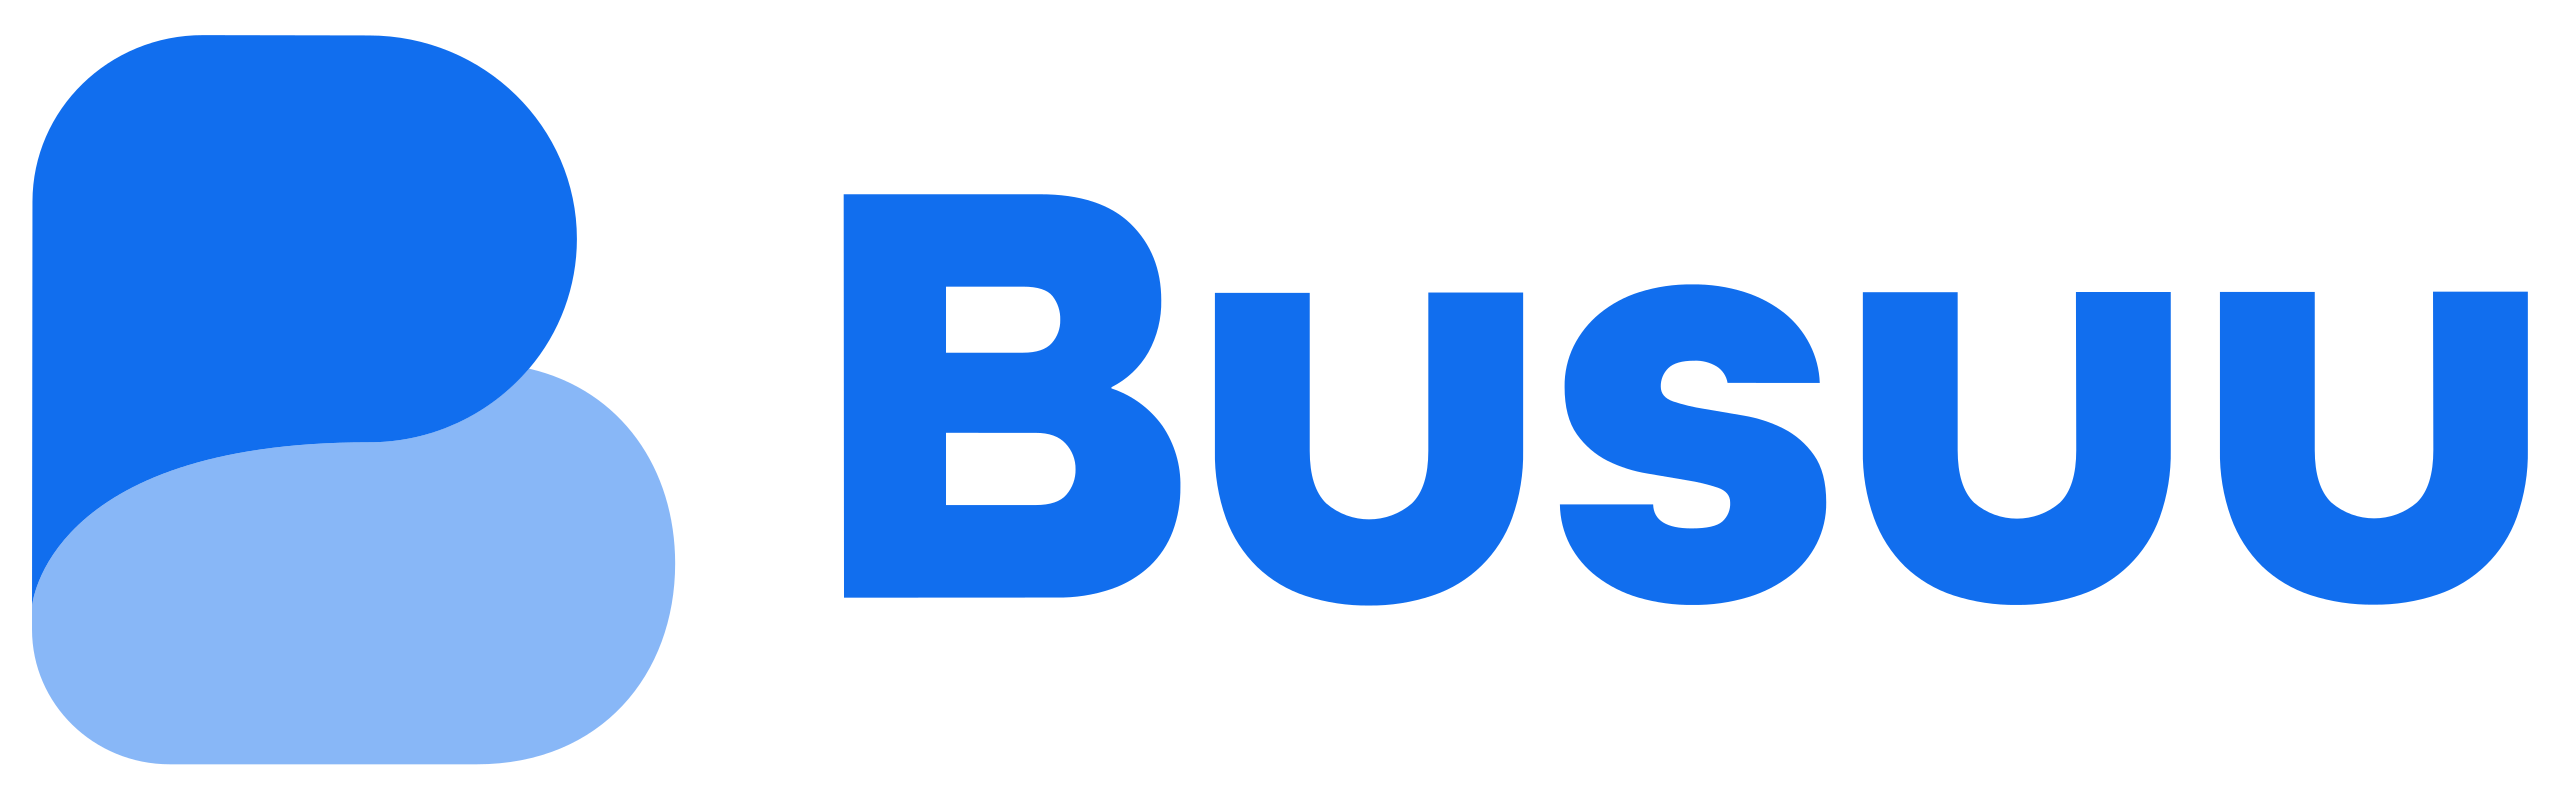 2560px-Busuu_logo.svg.png